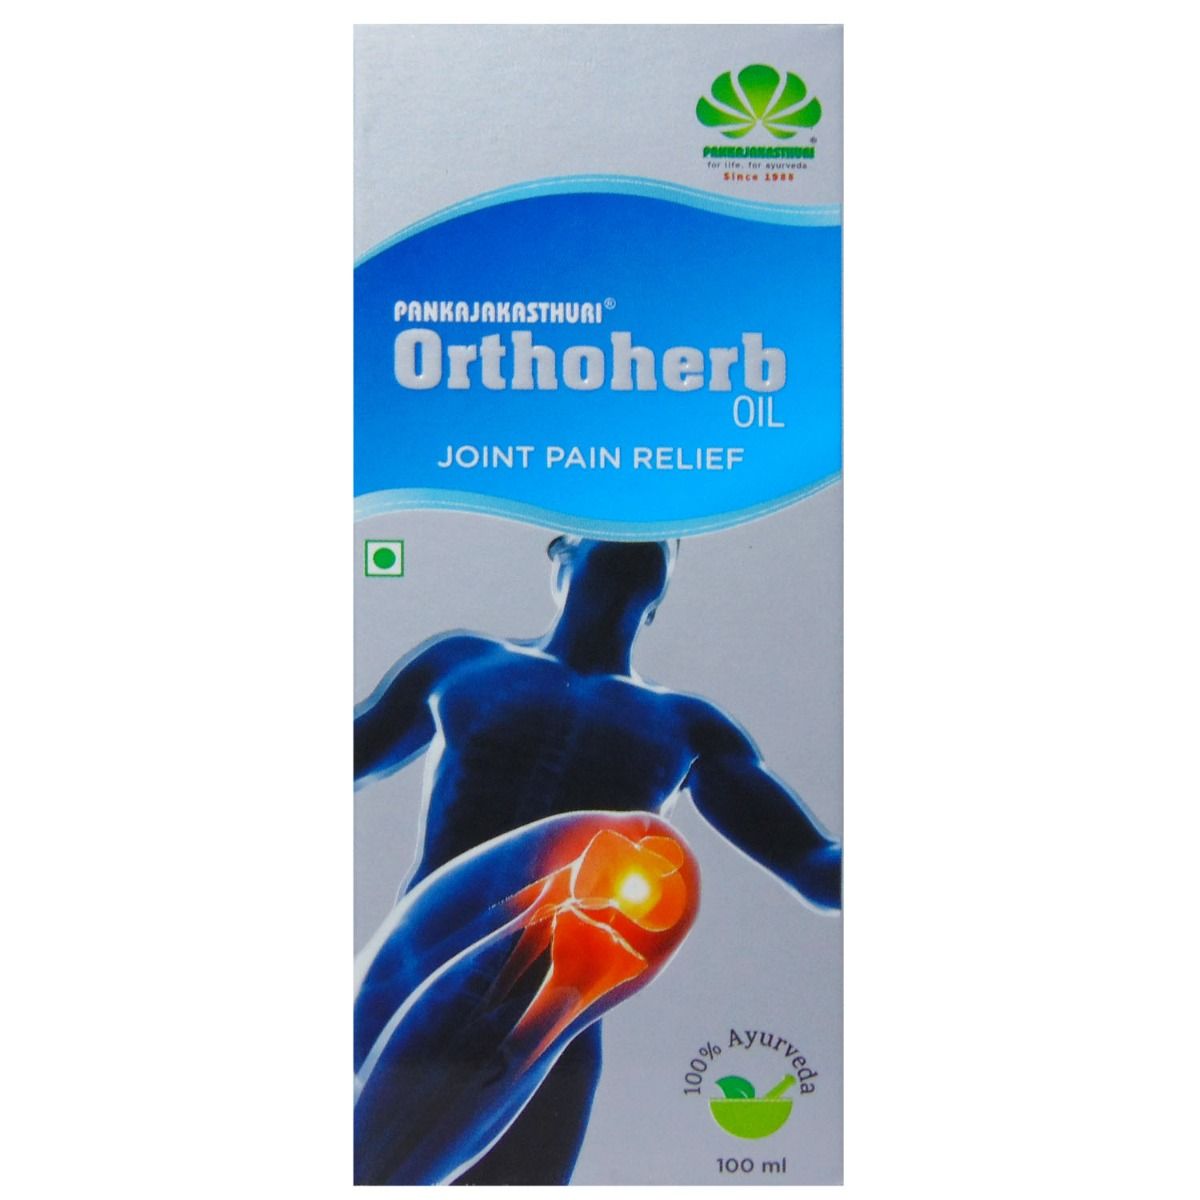 Pankajakasthuri Orthoherb Oil, 100 ml, Pack of 1 Oil